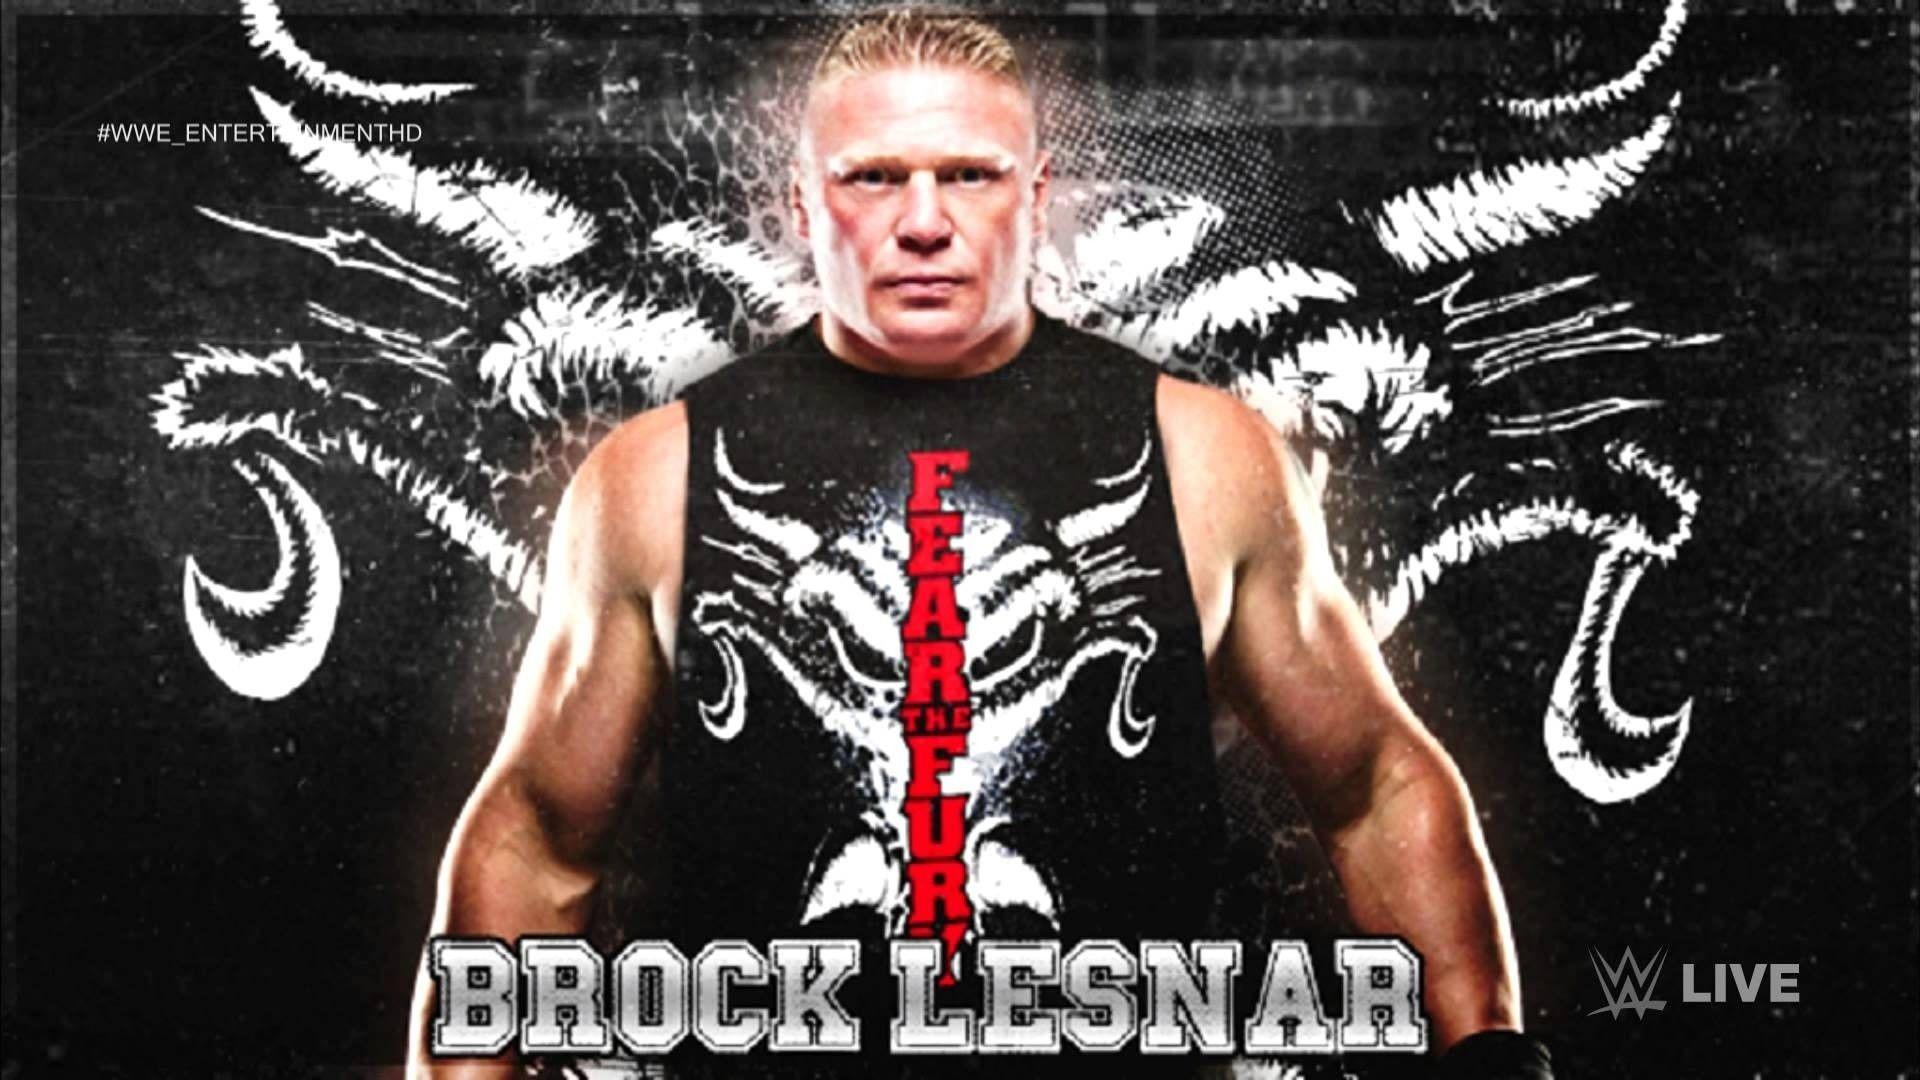 Brock Lesnar WWE Wallpaper 2018 (the best image in 2018)